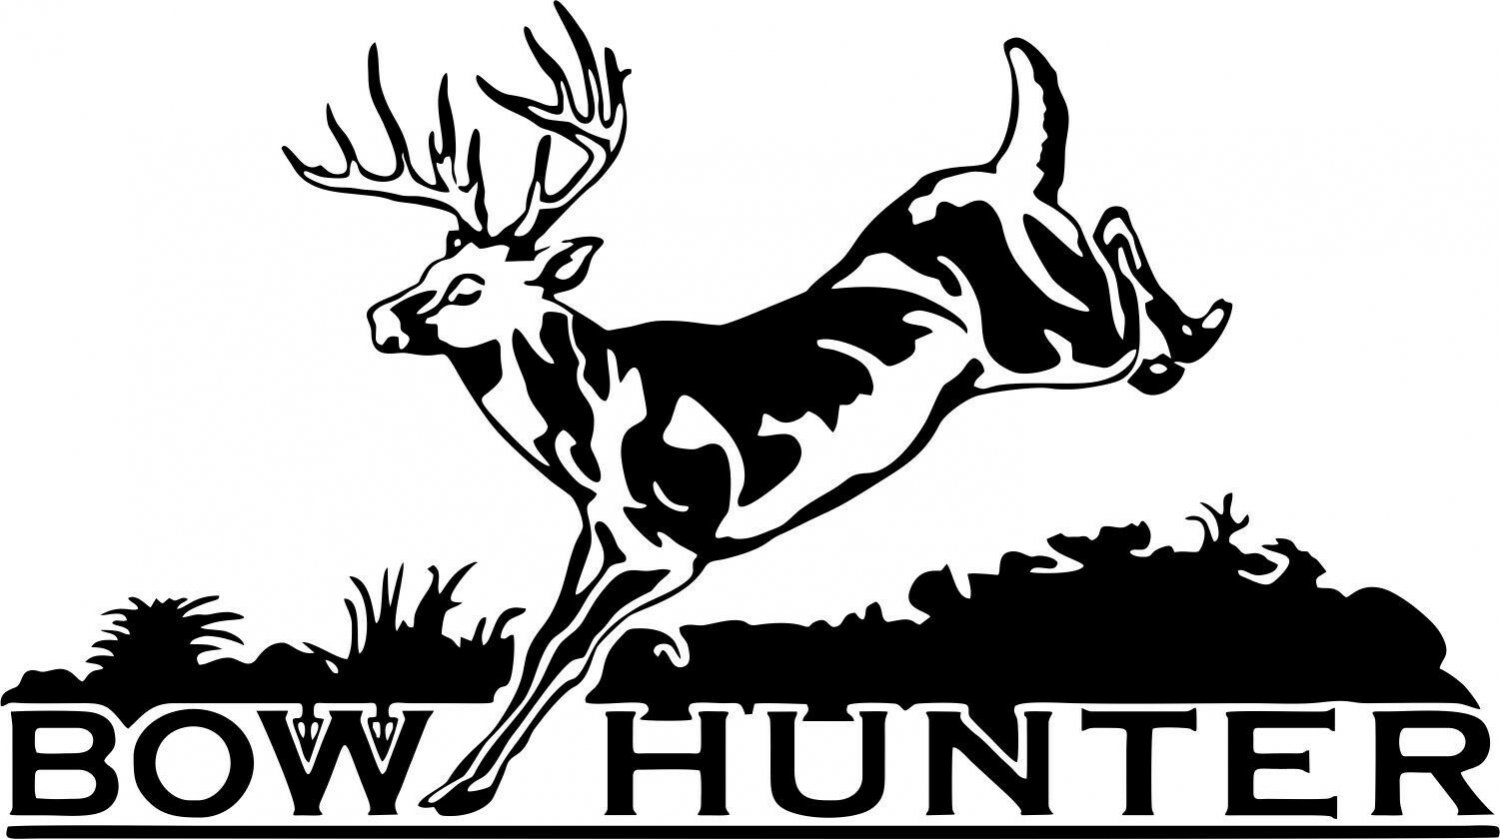 Bow Hunter Hunting Deer Whitetail Buck Car Truck Window Vinyl Decal Sticker 